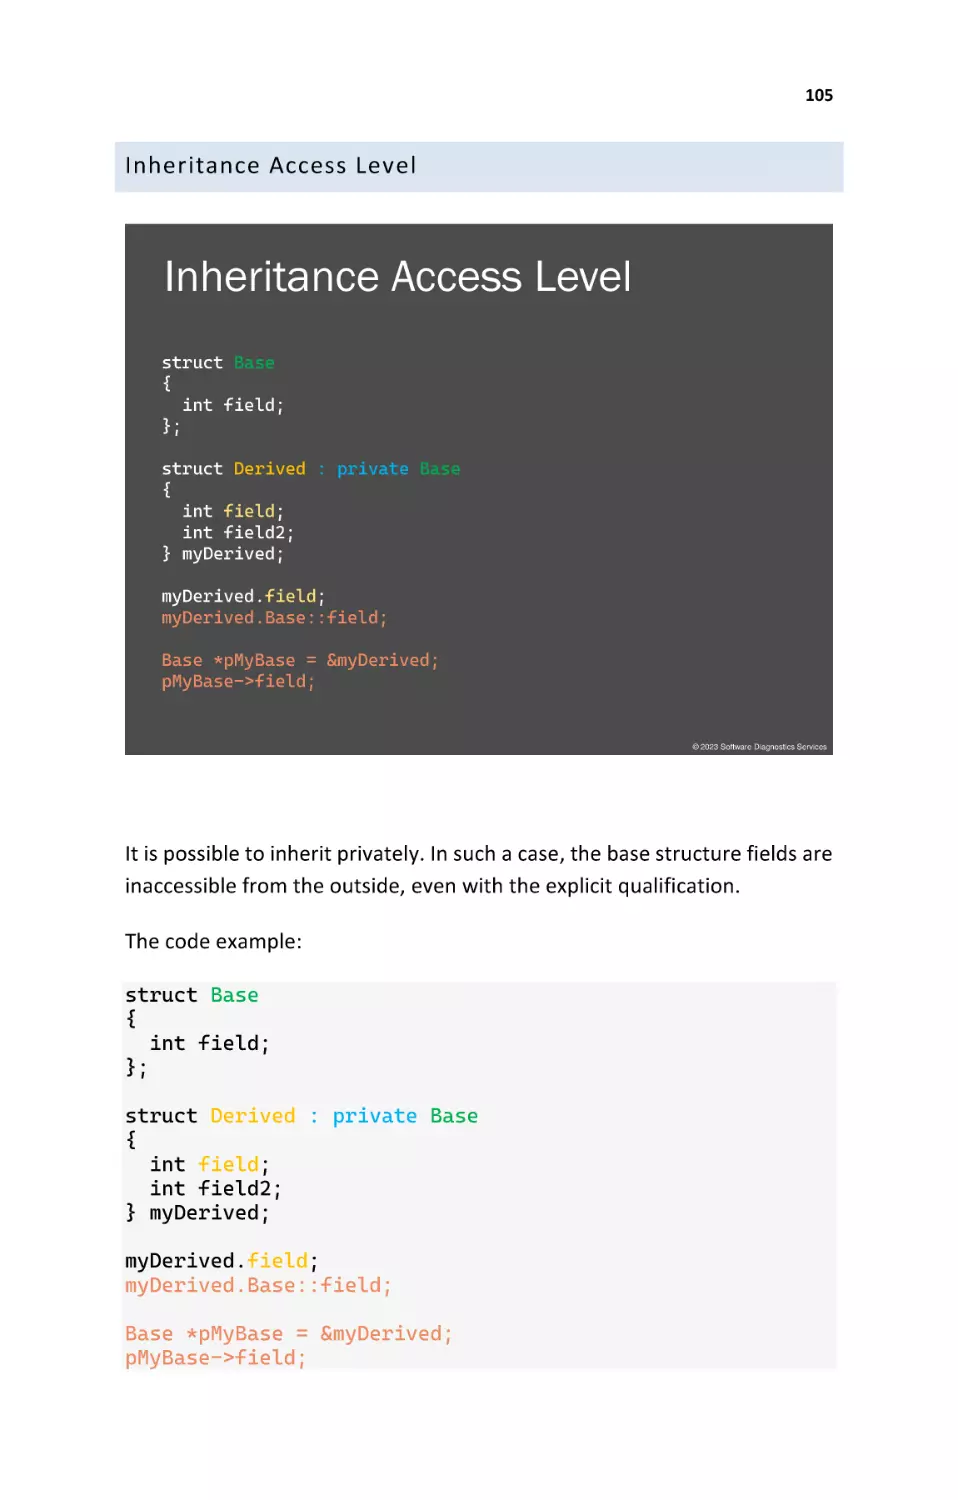 Inheritance Access Level